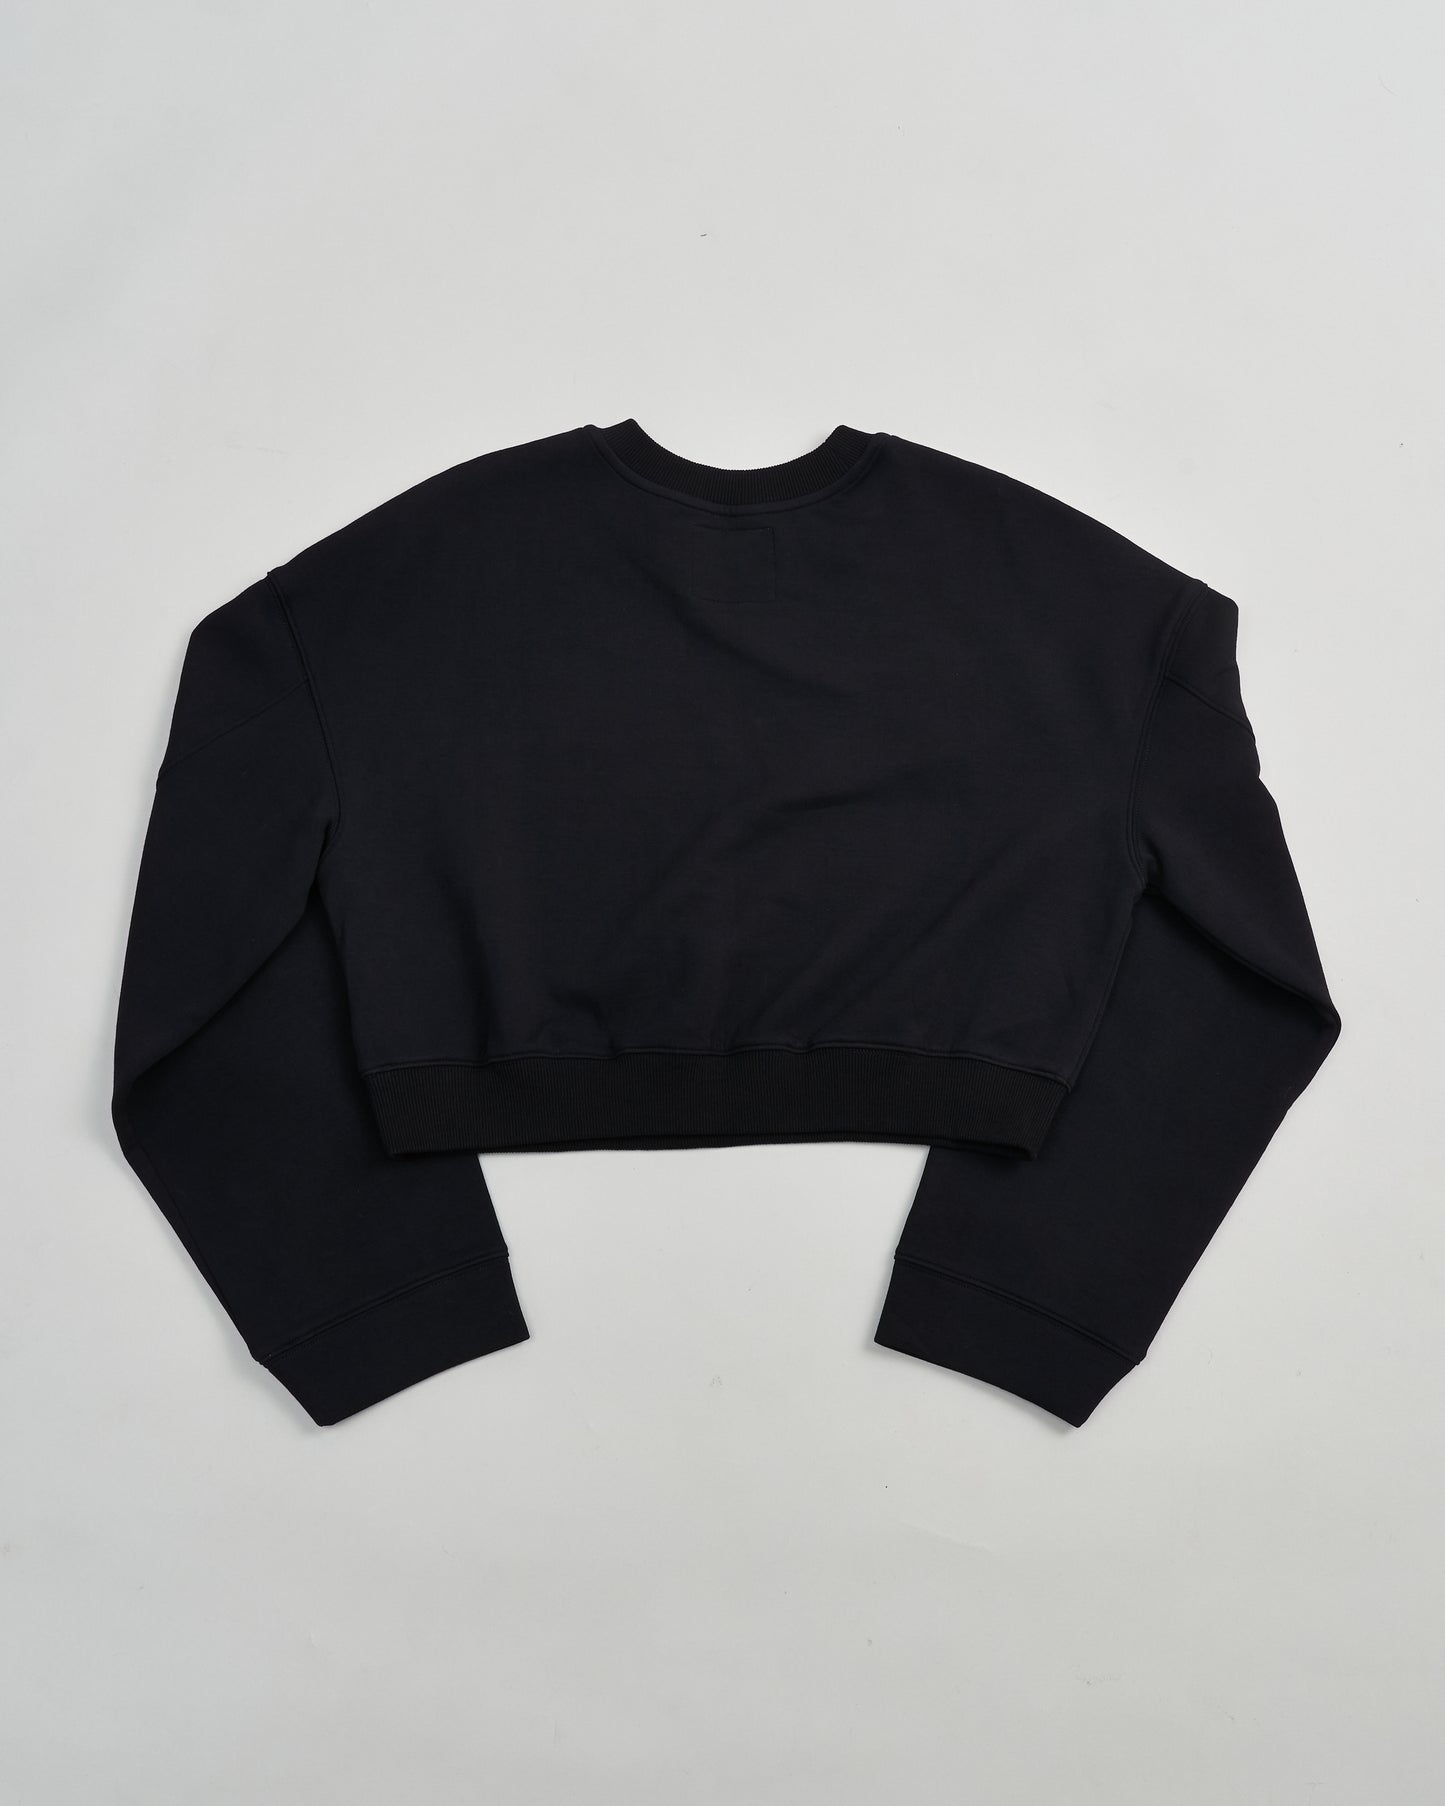 A02 短版衛衣 Cropped Sweatshirt